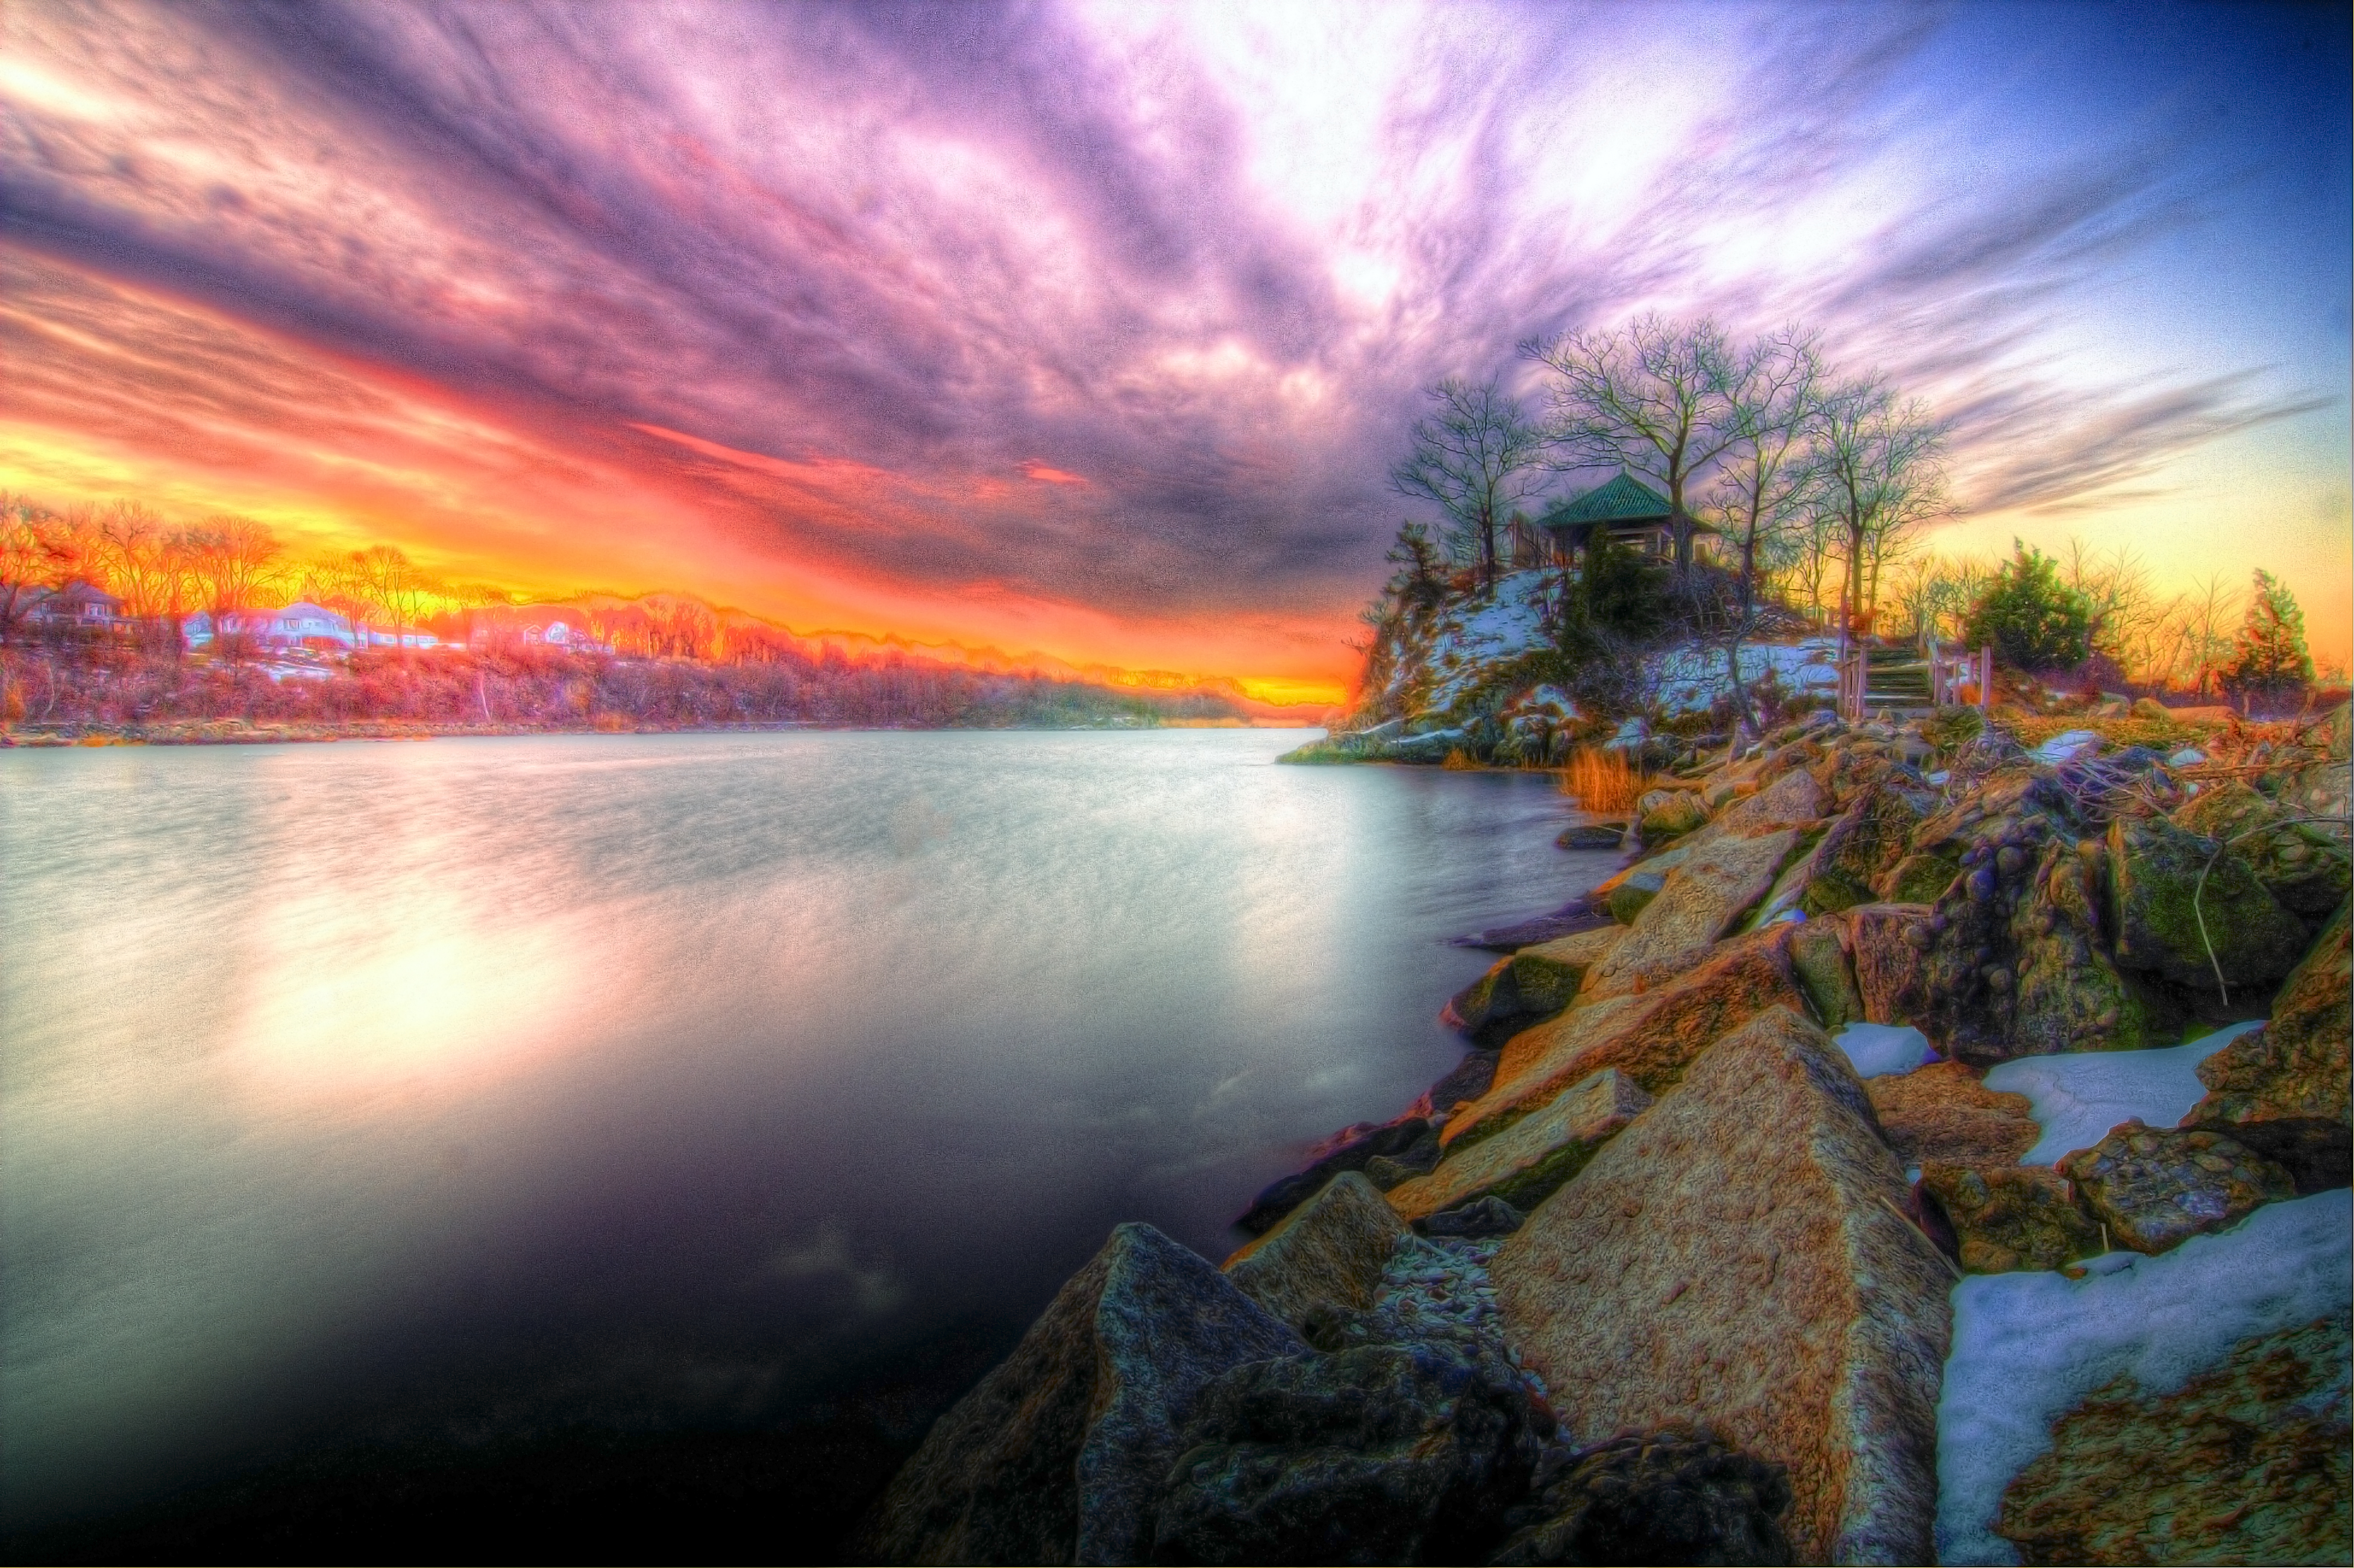 Sunset 4k Ultra HD Wallpaper | Background Image ...